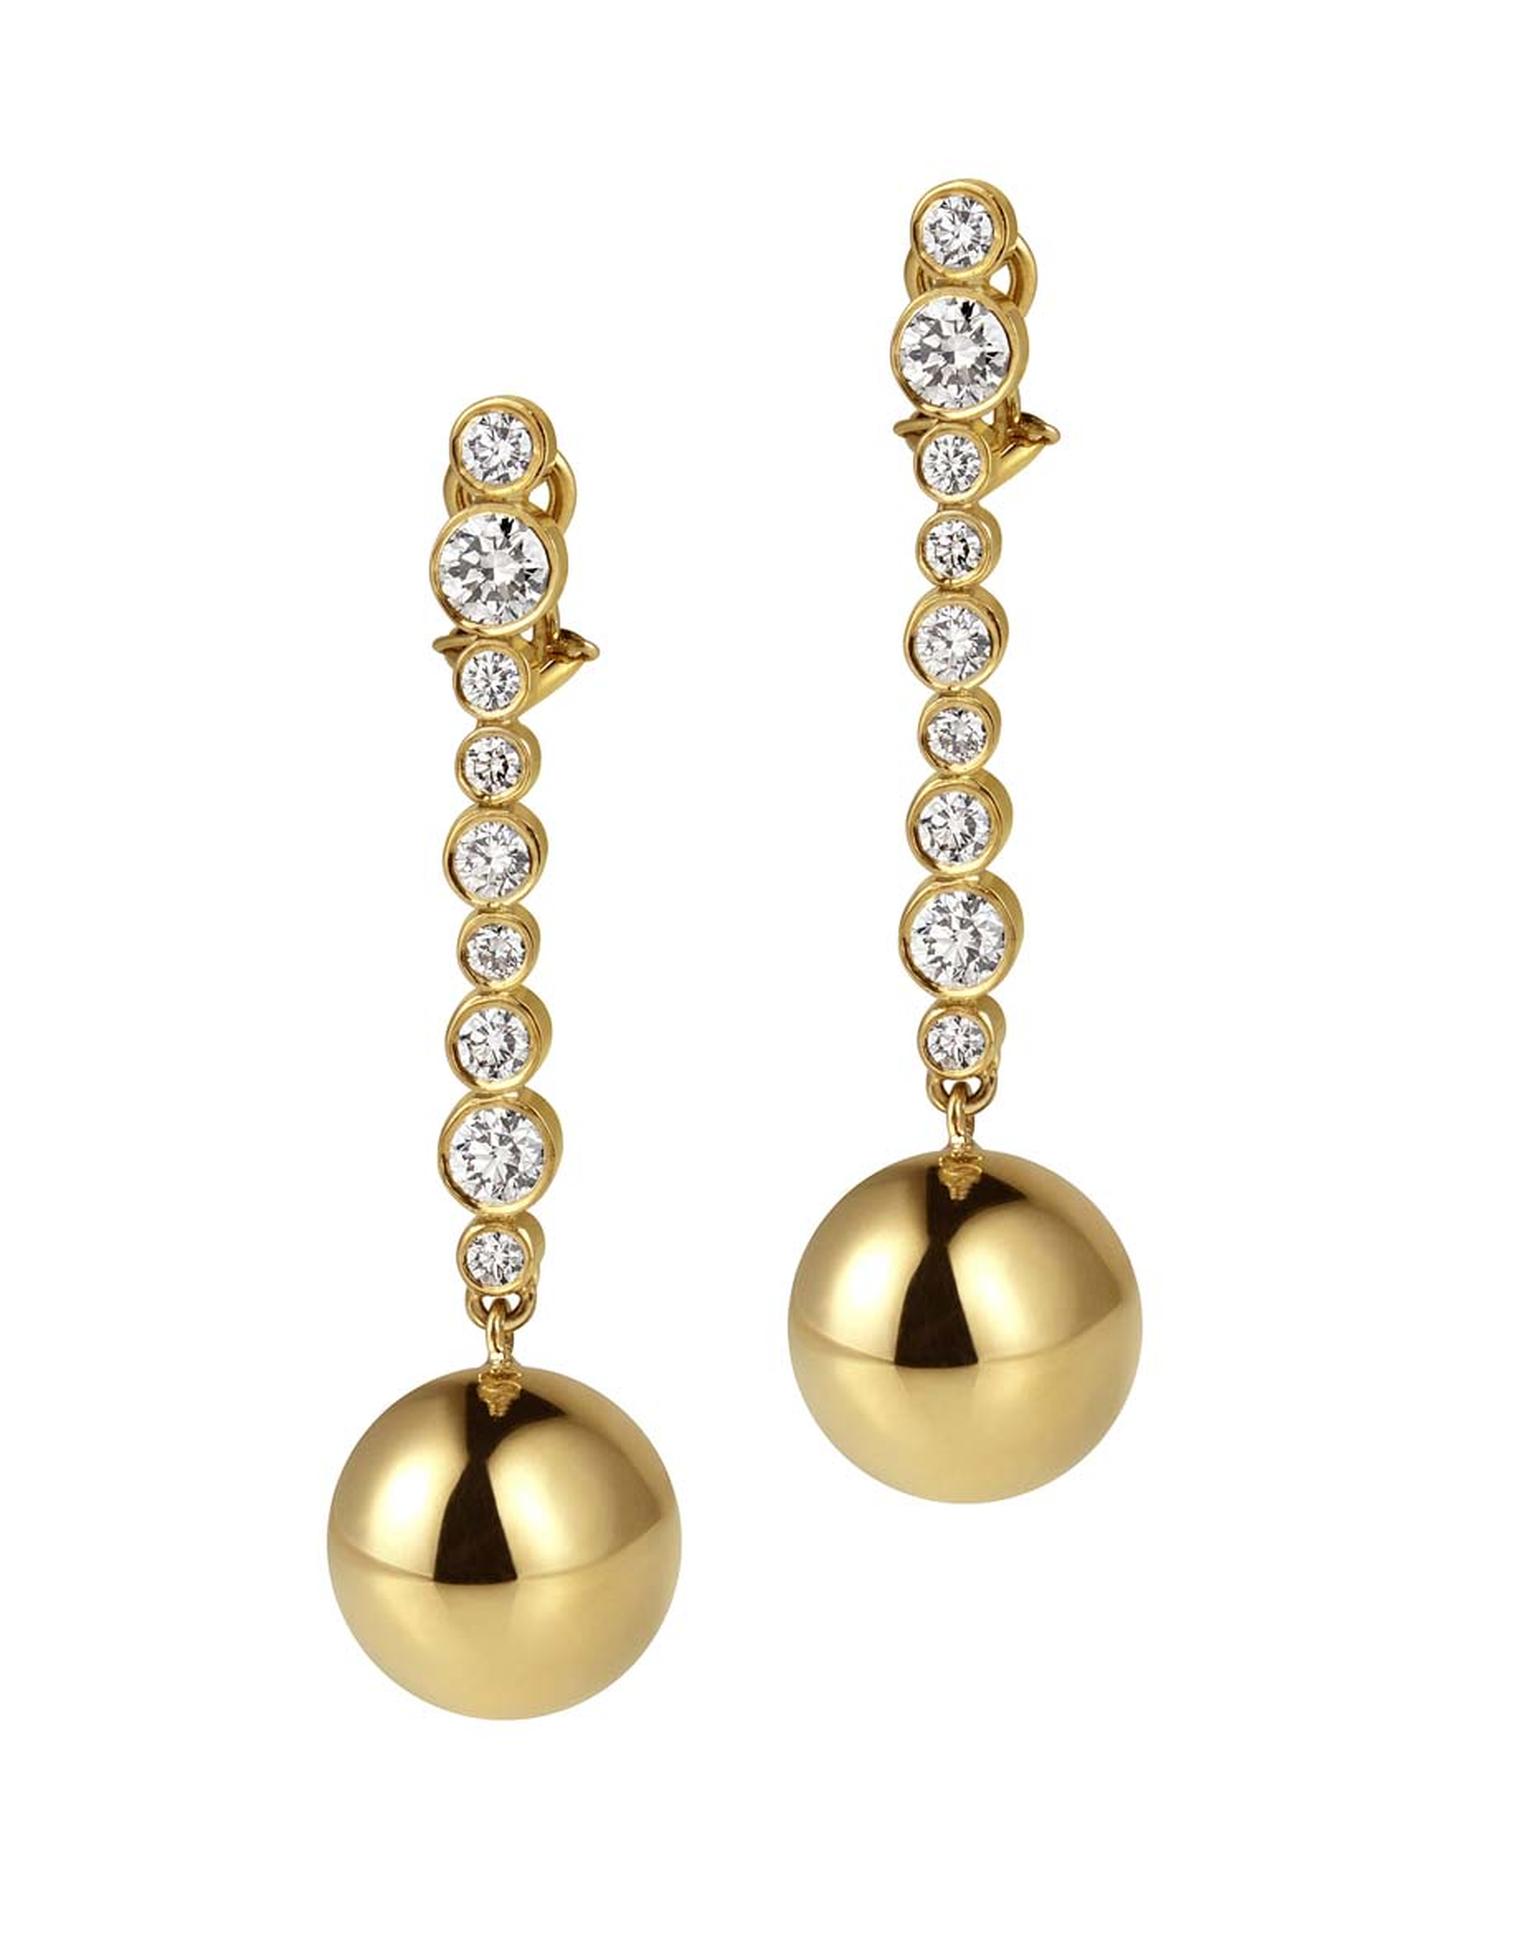 Elena Votsi Bubbles of Champagne earrings